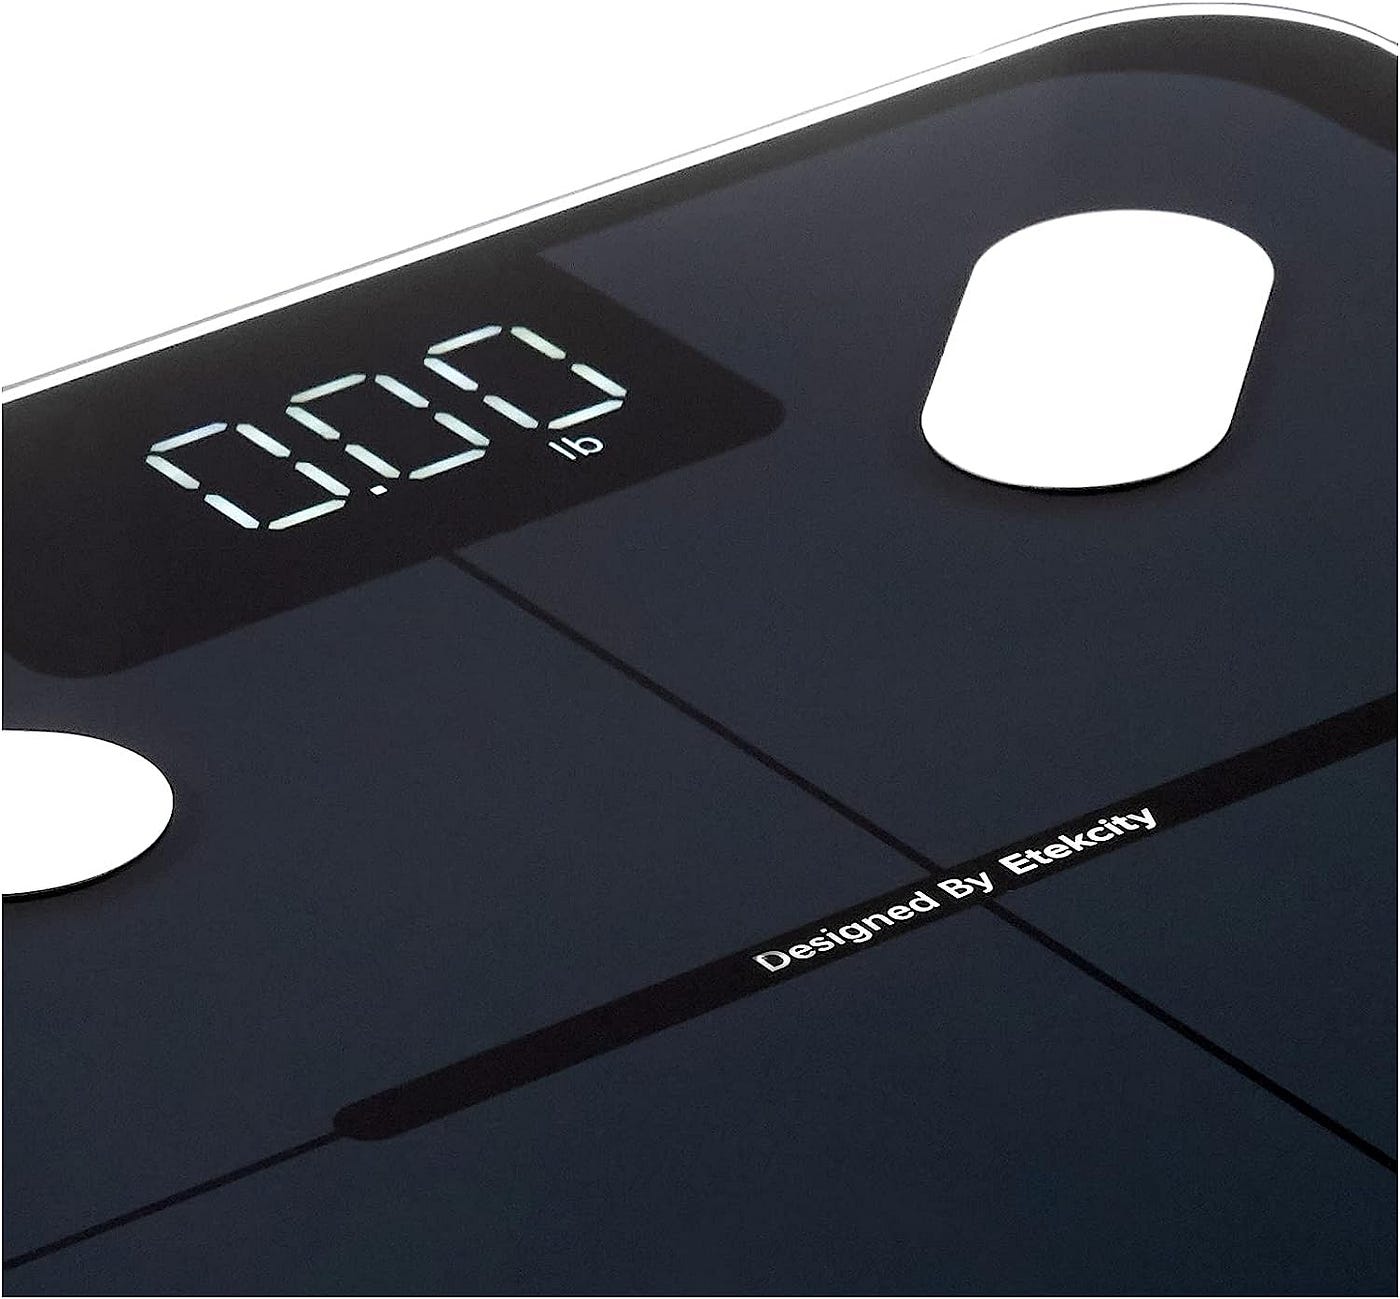 Etekcity Smart Scale: Body Weight/Fat, BMI, Bluetooth 400lb